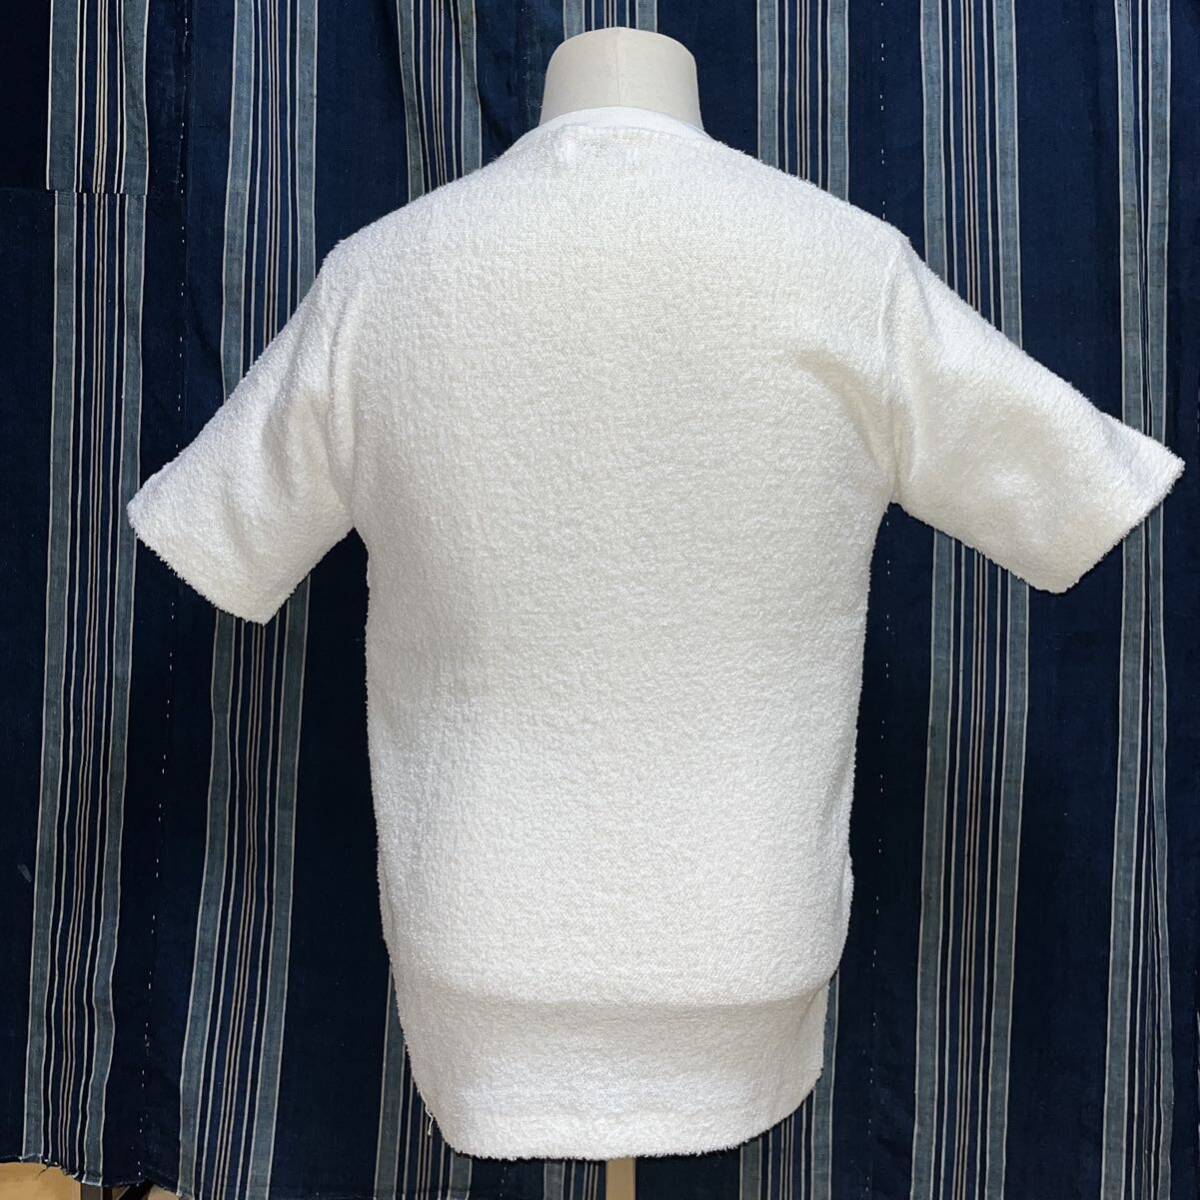 rare パイル地 40s 50s 60s 70s auburn knitwear tshirt pile fabric usa 40年代 50年代 60年代 70年代 アメリカ製 白t_画像2